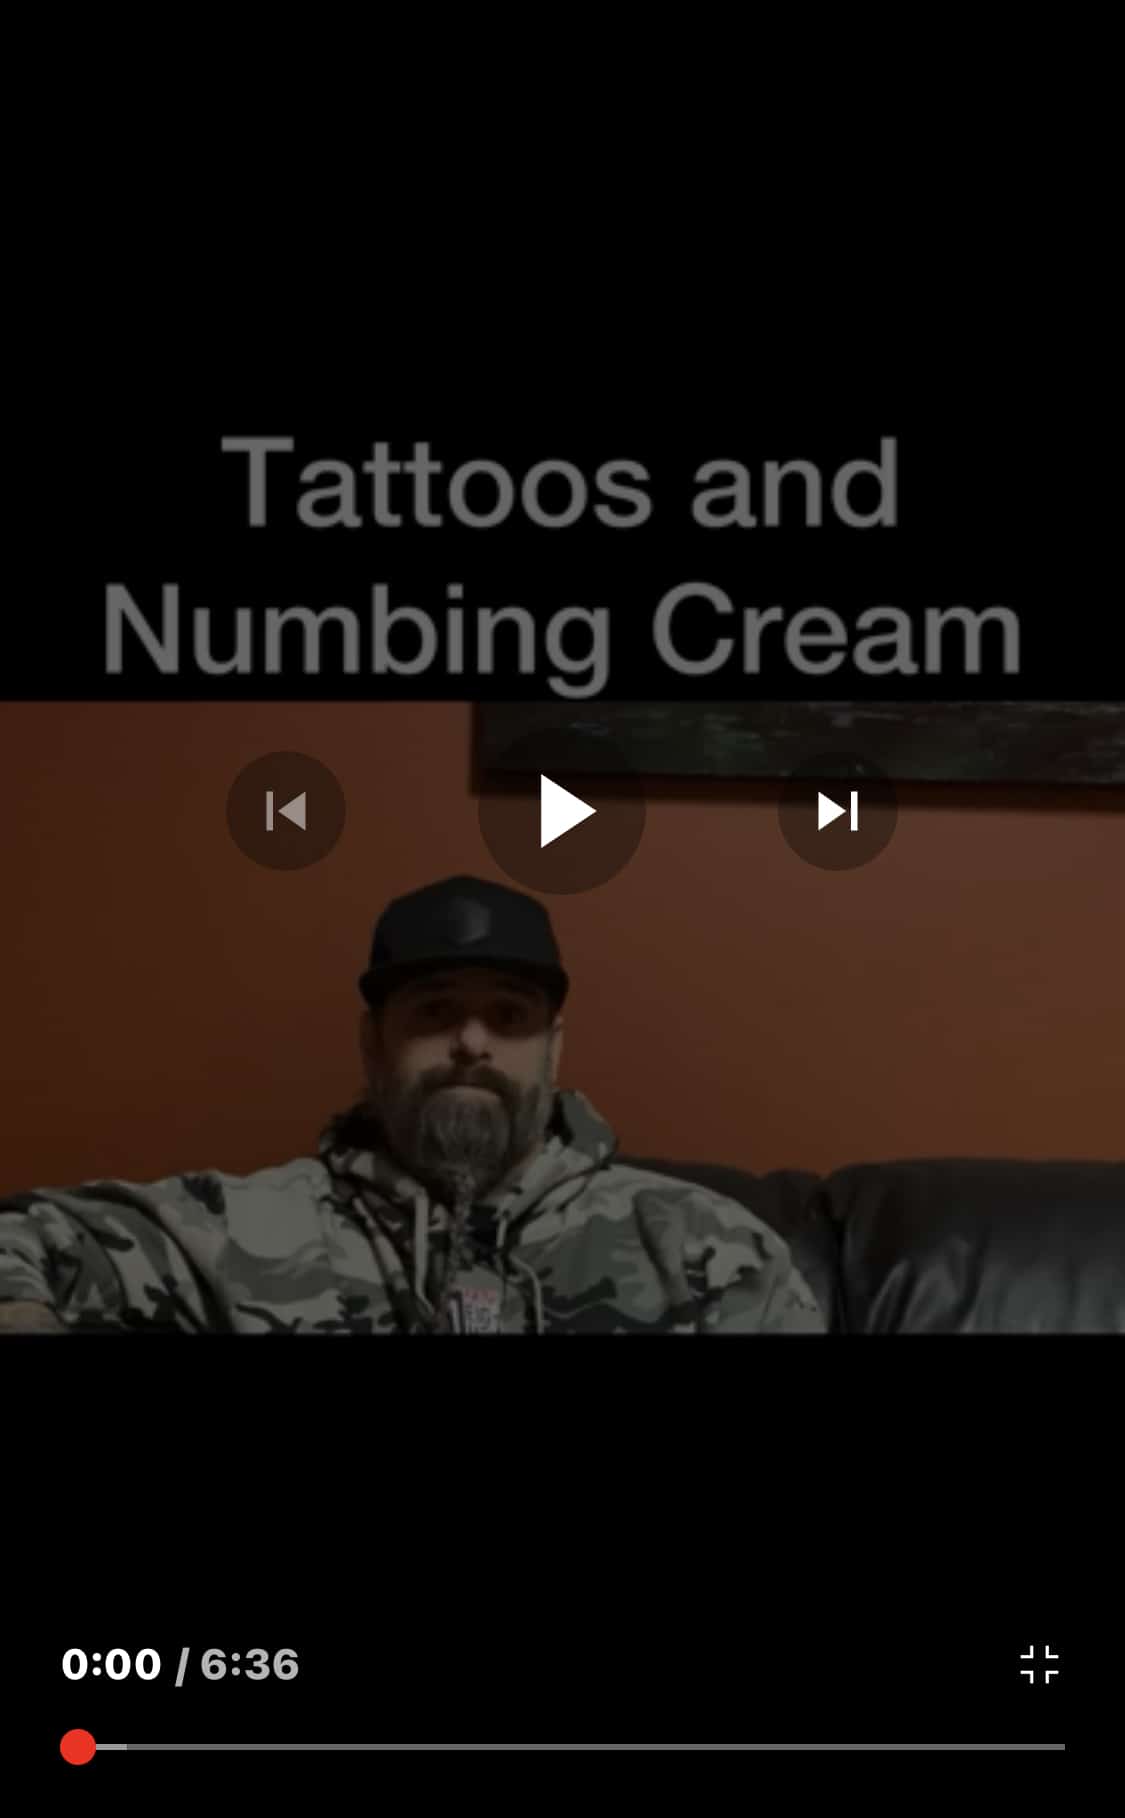 Tattoos and numbing cream